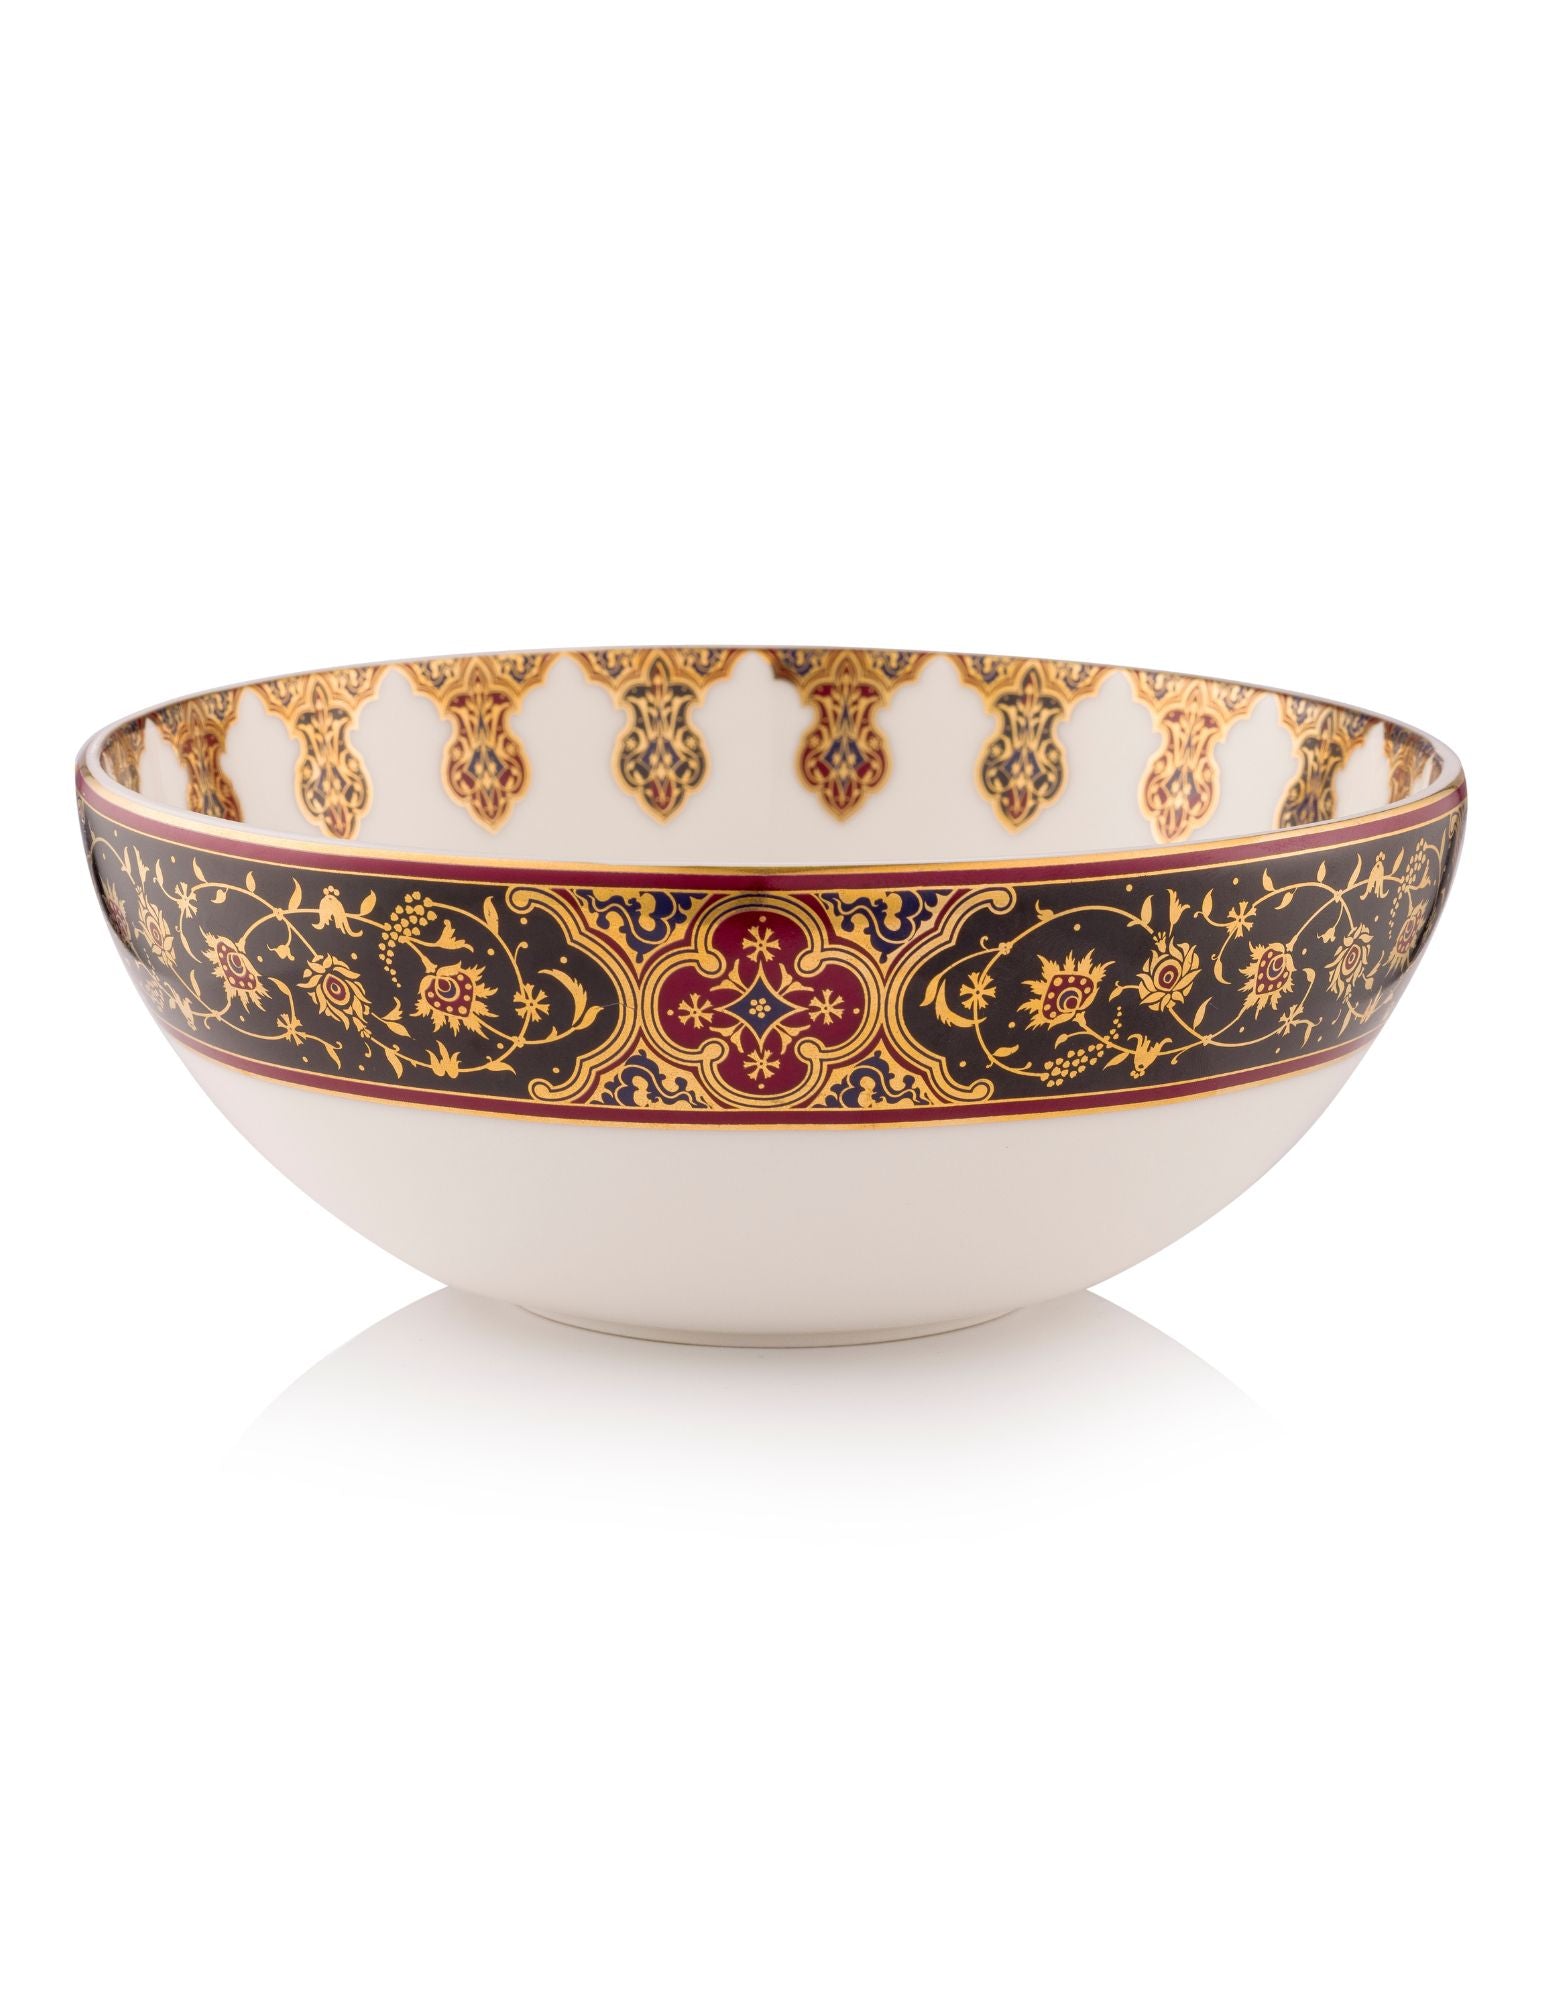 Begum Serving bowl in plain white background